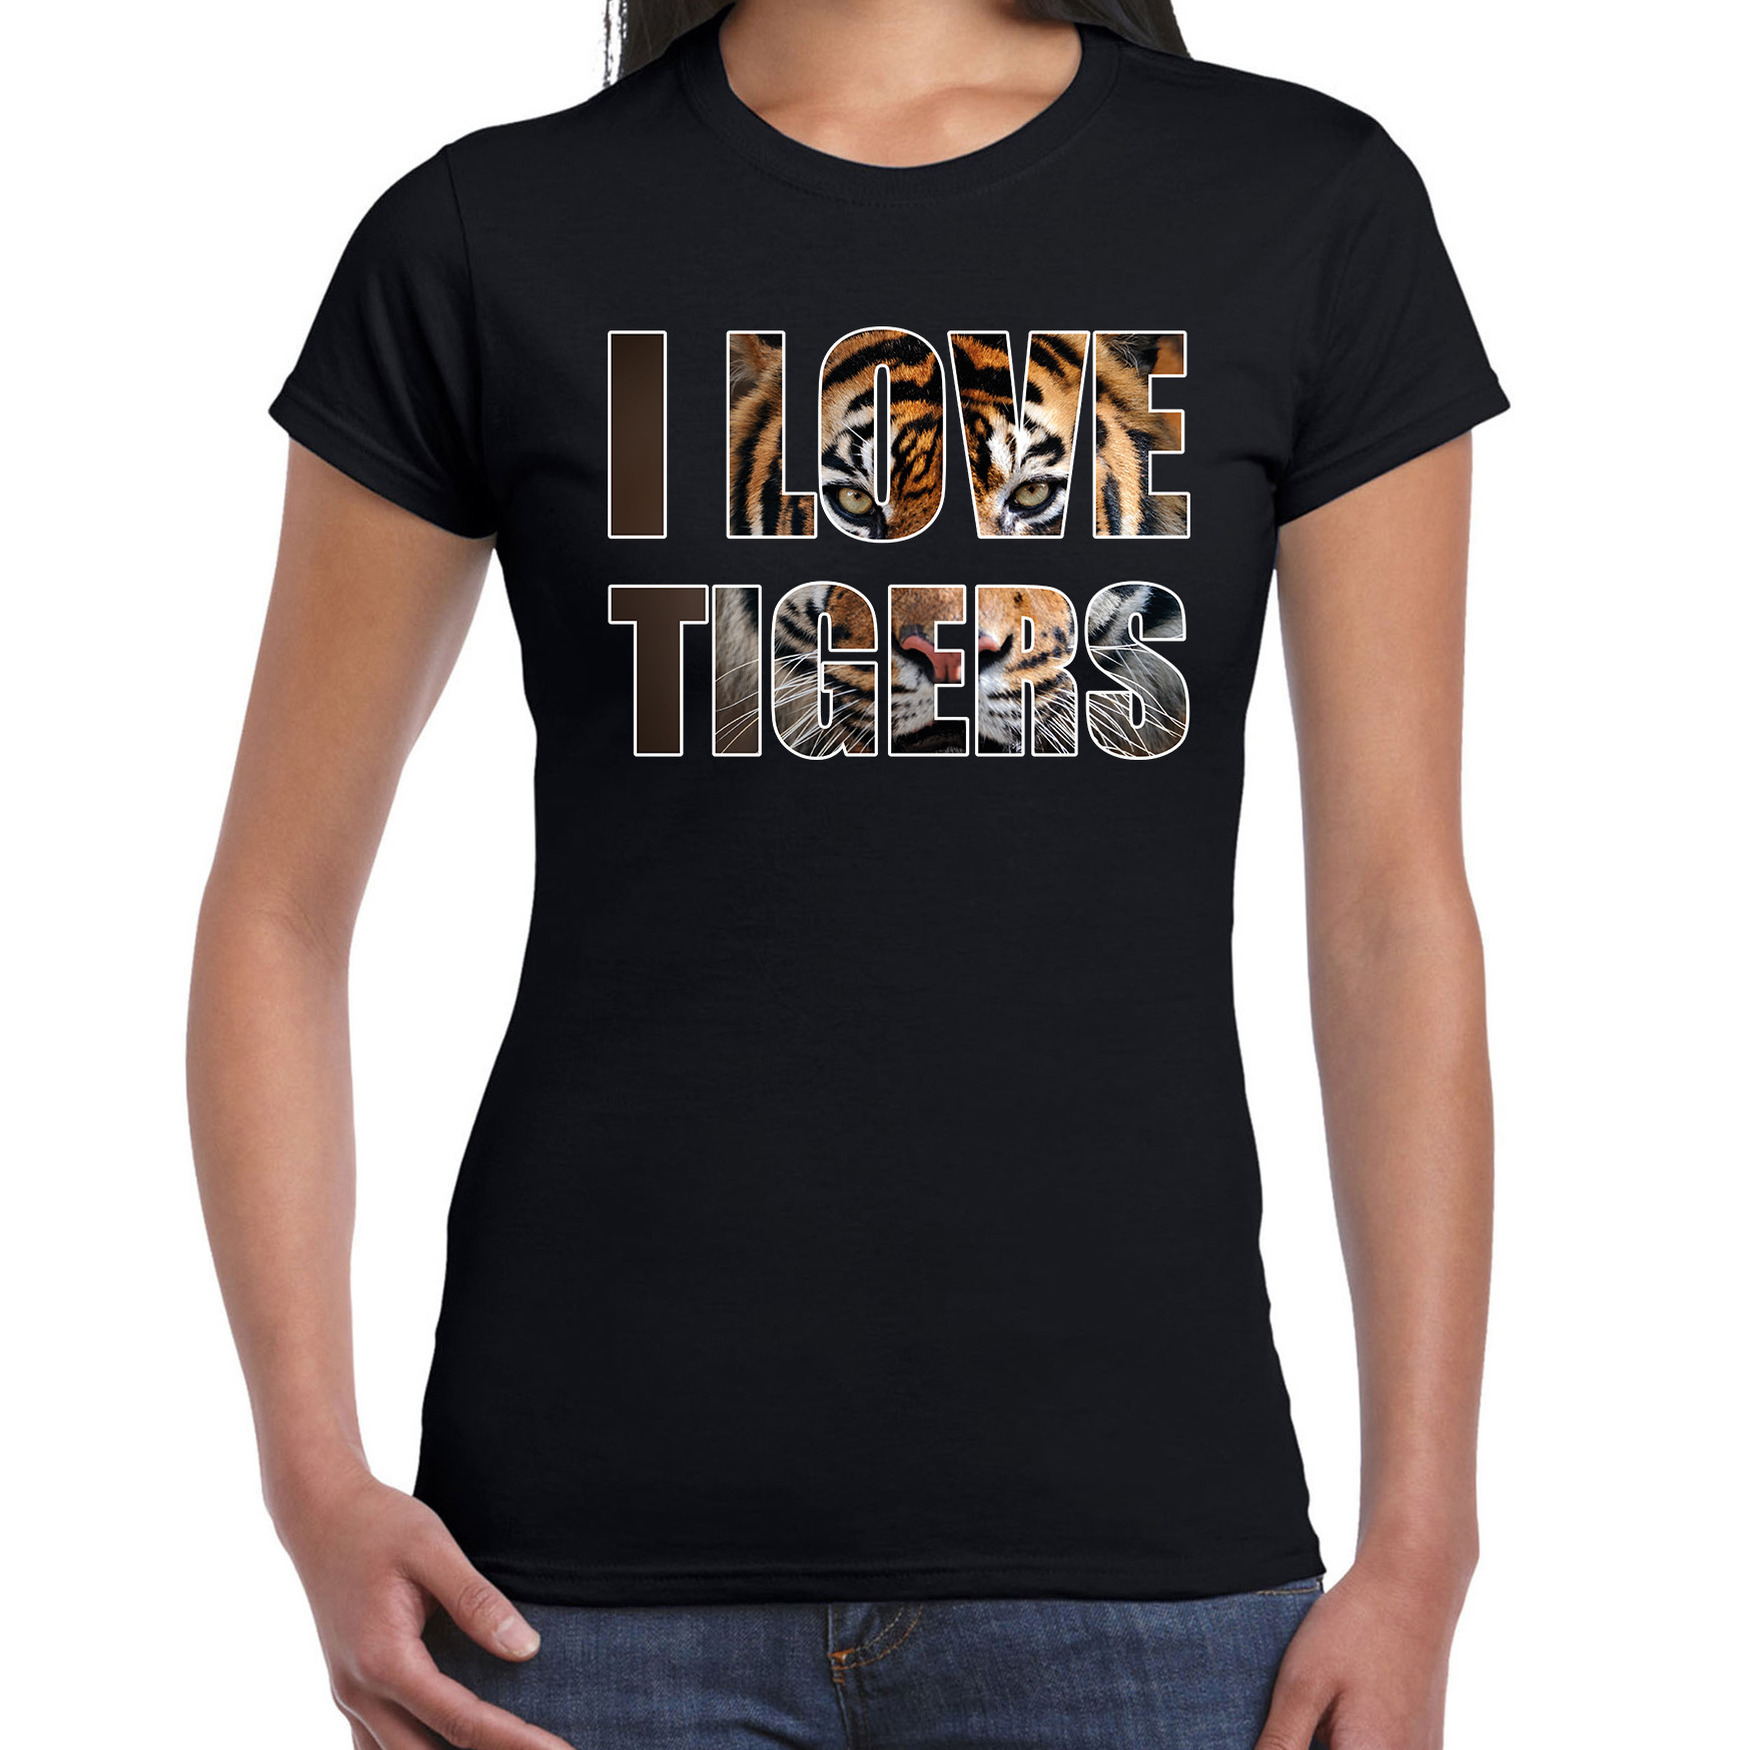 I love tigers - tijgers dieren shirt zwart dames